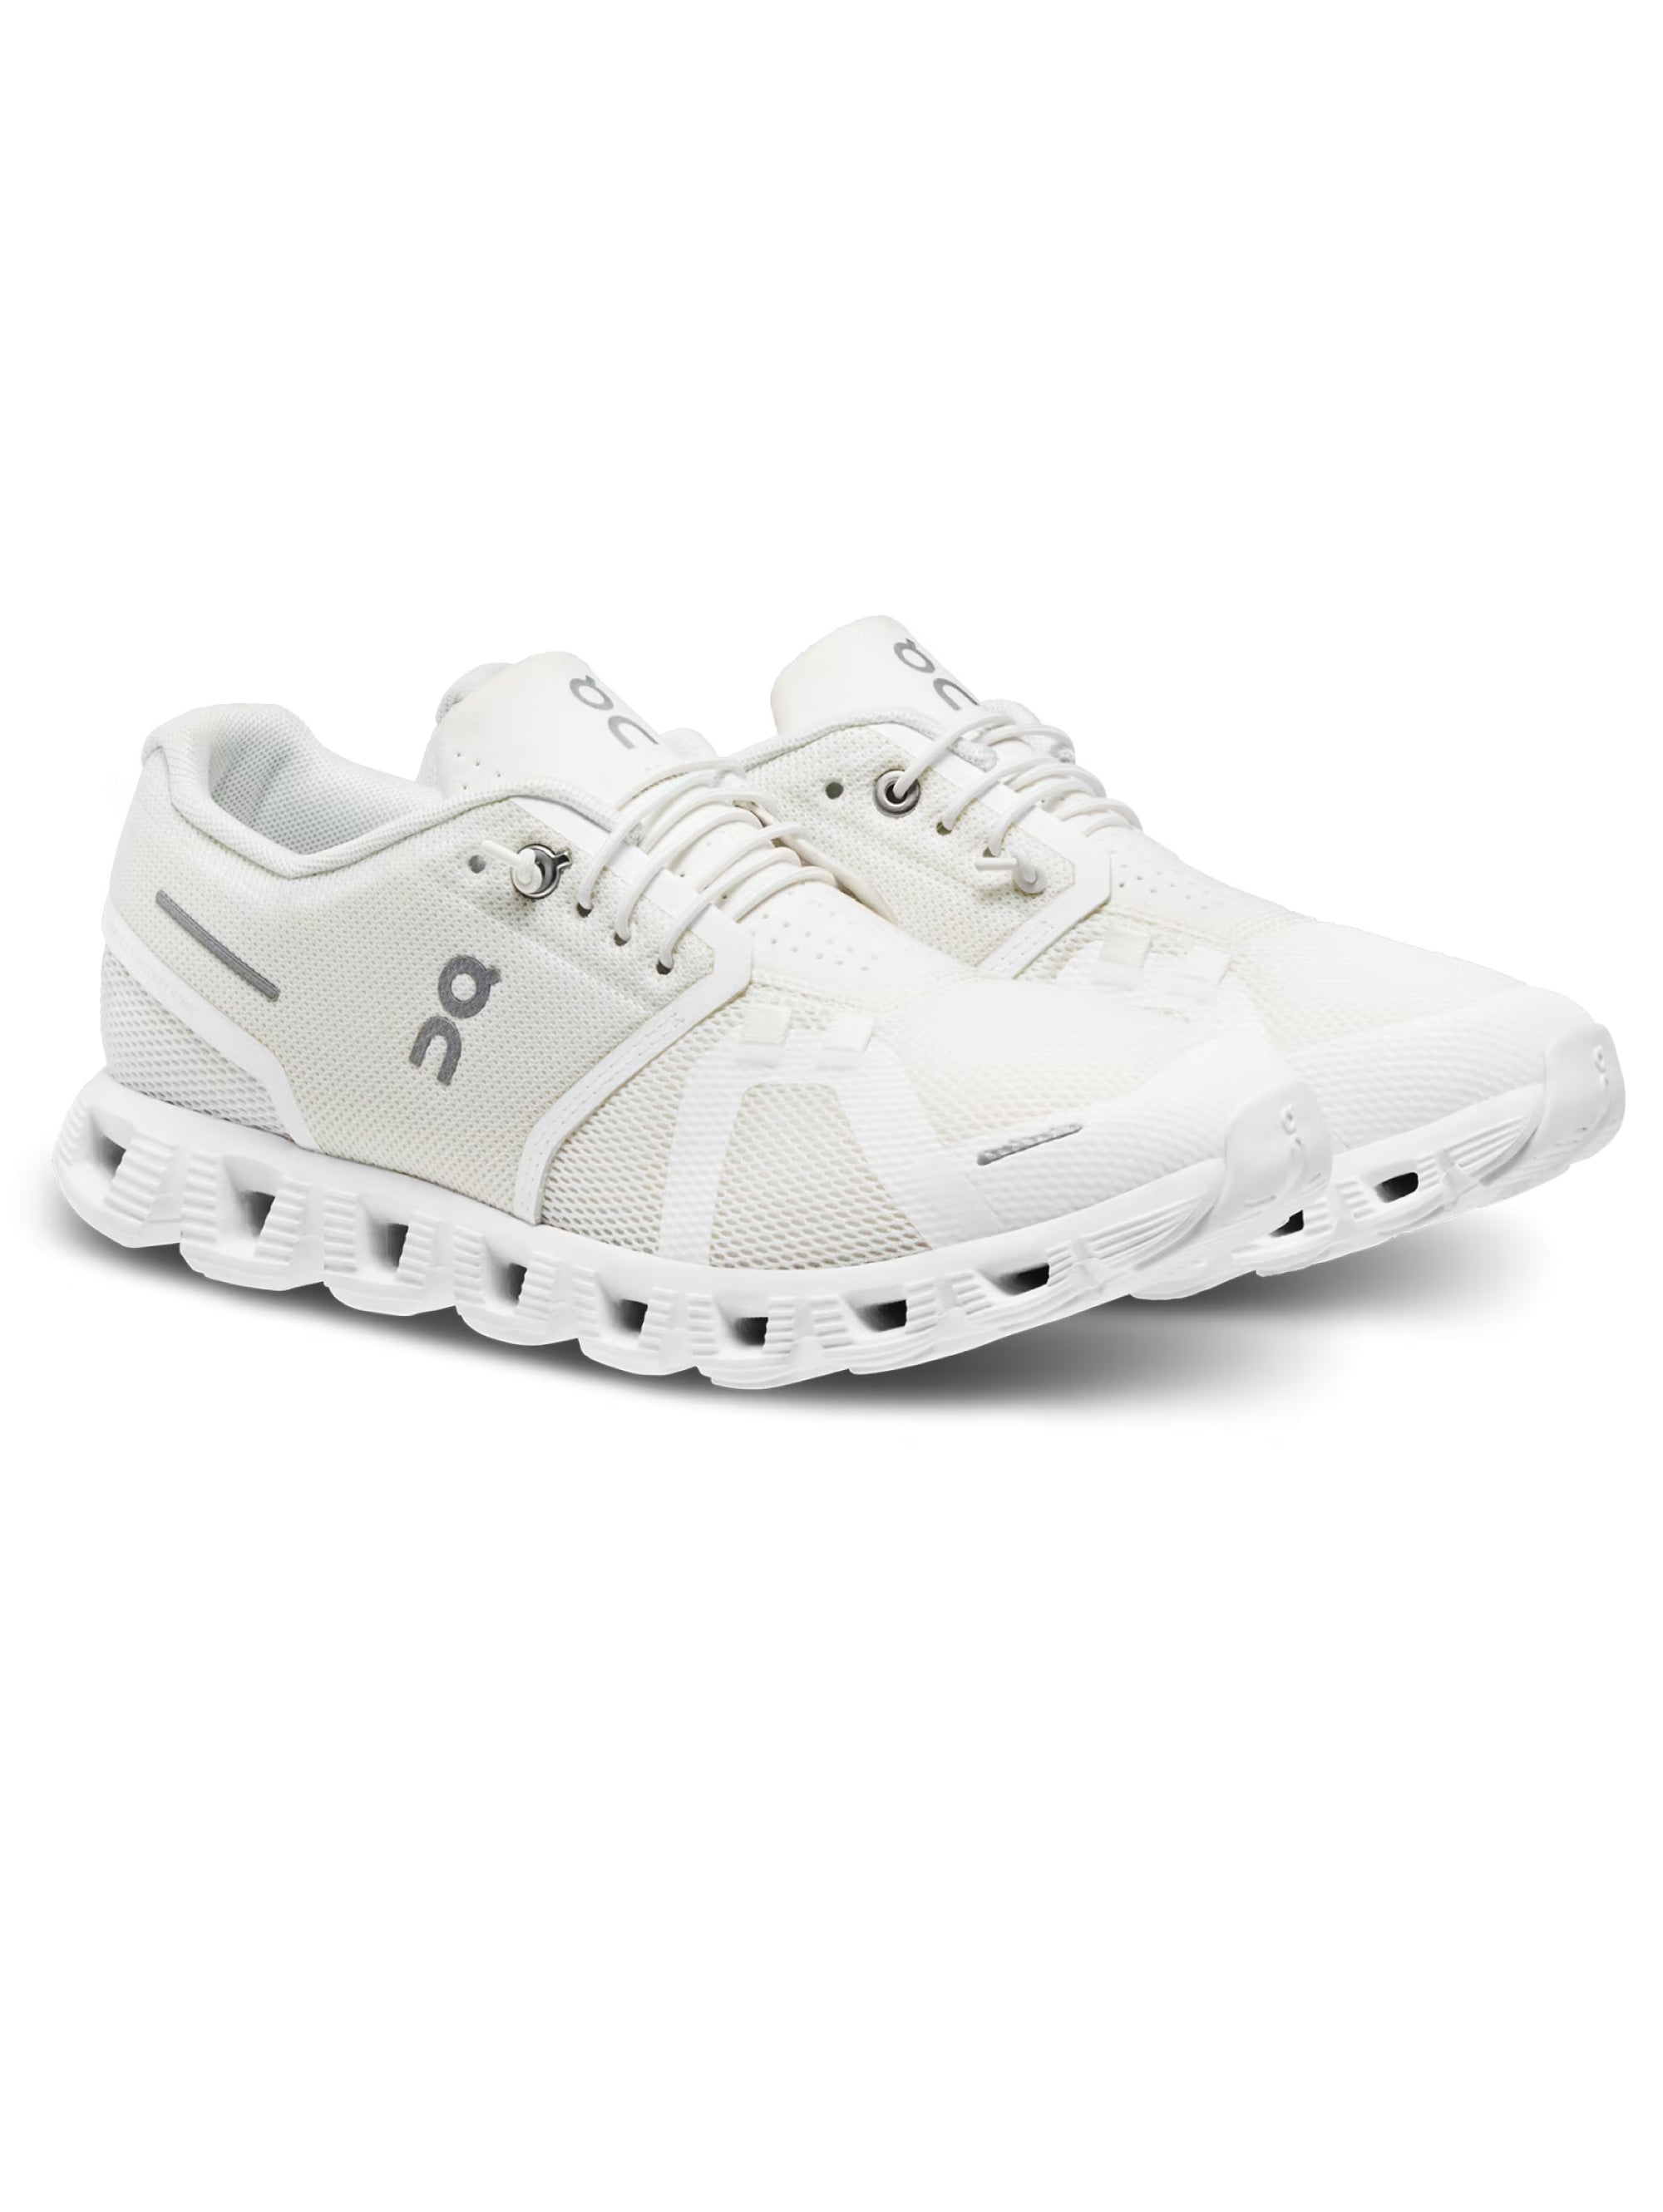 Cloud 5 White Running Sneakers